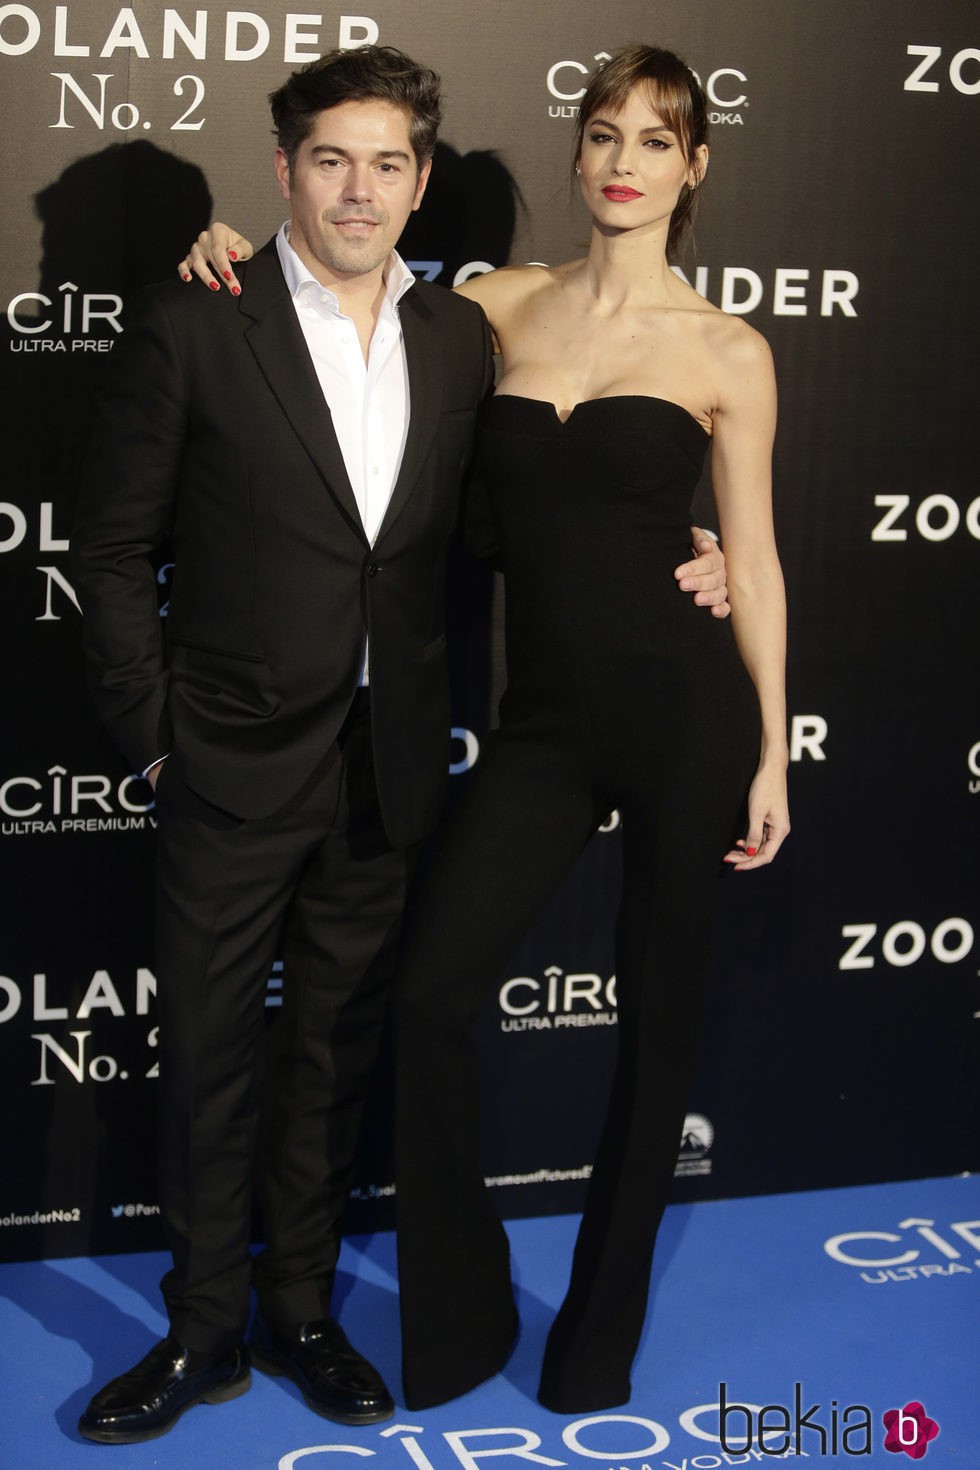 Ariande Artiles y Jorge Vázquez en la premiere en Madrid de 'Zoolander 2'